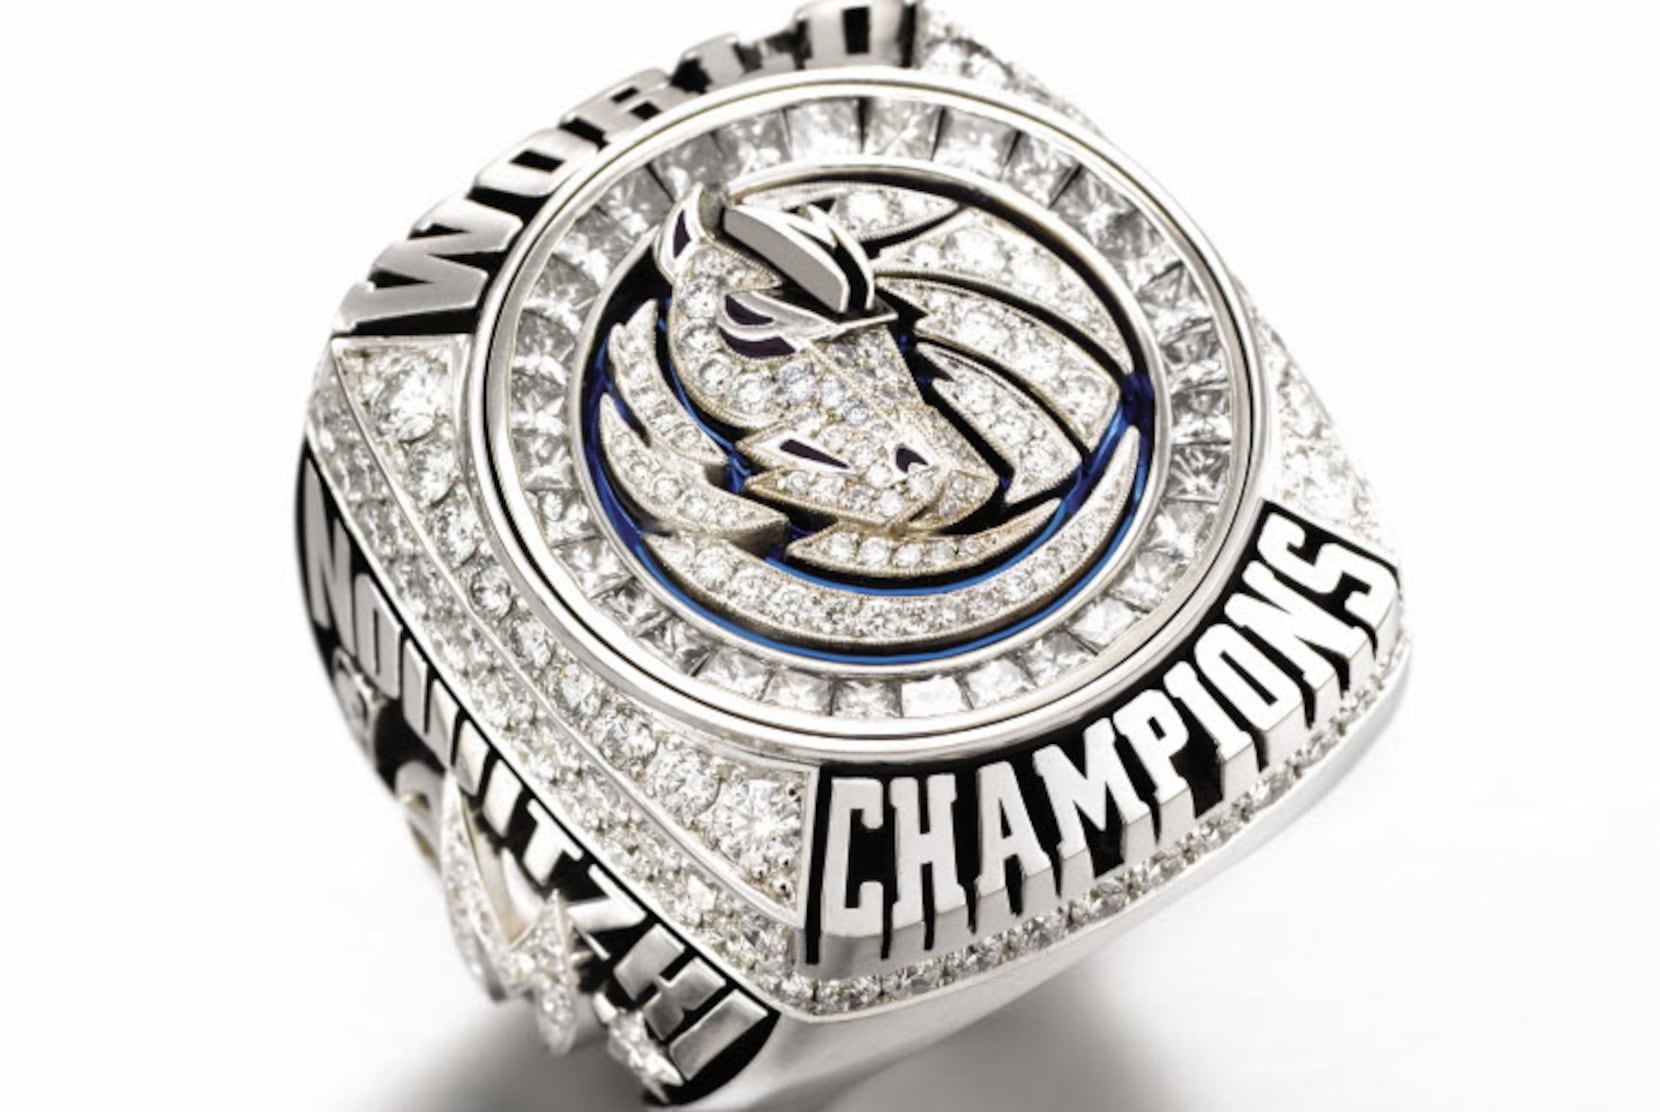 2011 Dallas mavericks NBA championship ring by championshipringclub - Issuu